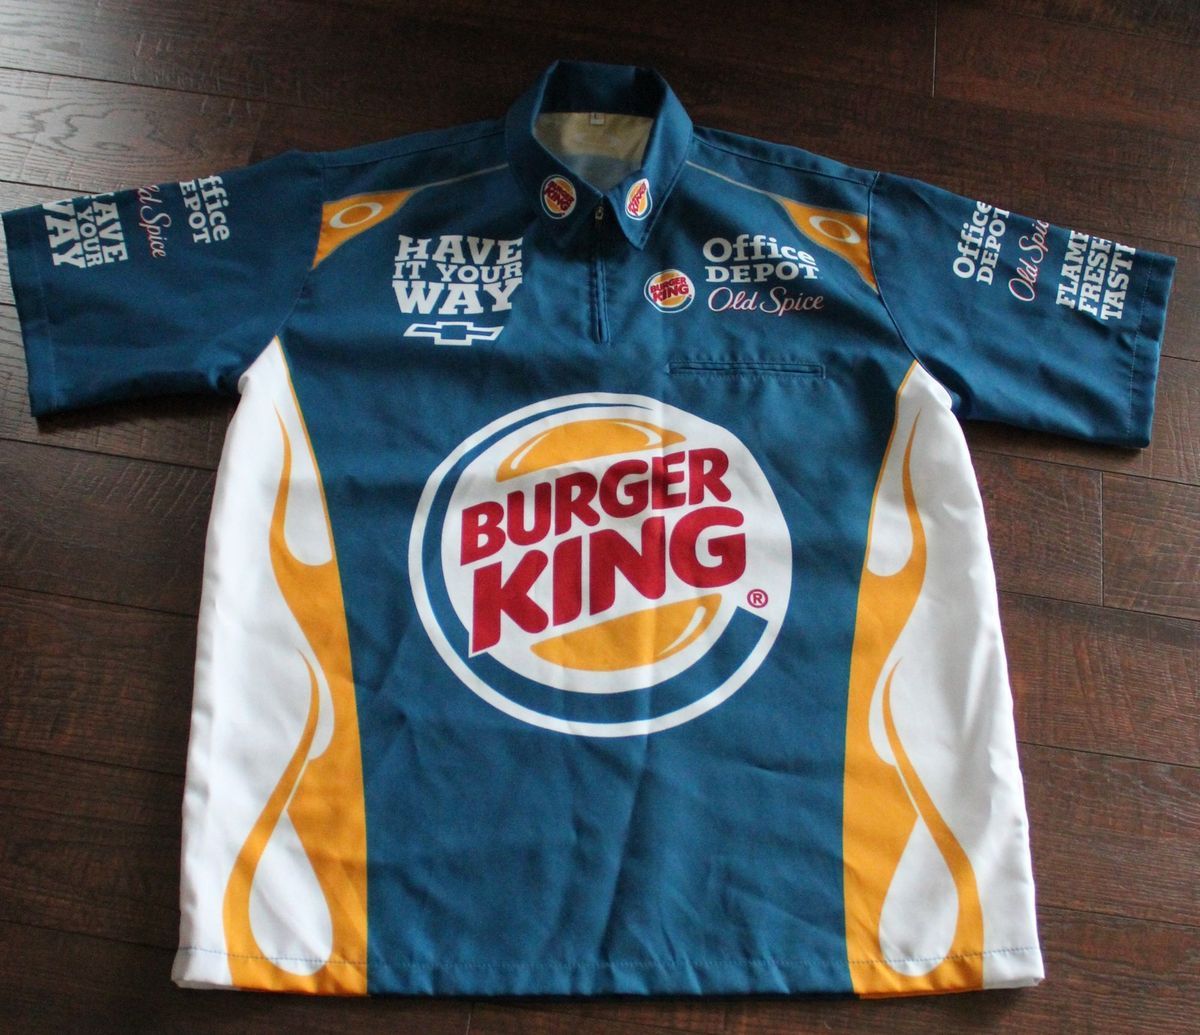 Tony Stewart Burger King race pit crew shirt worn by team Large